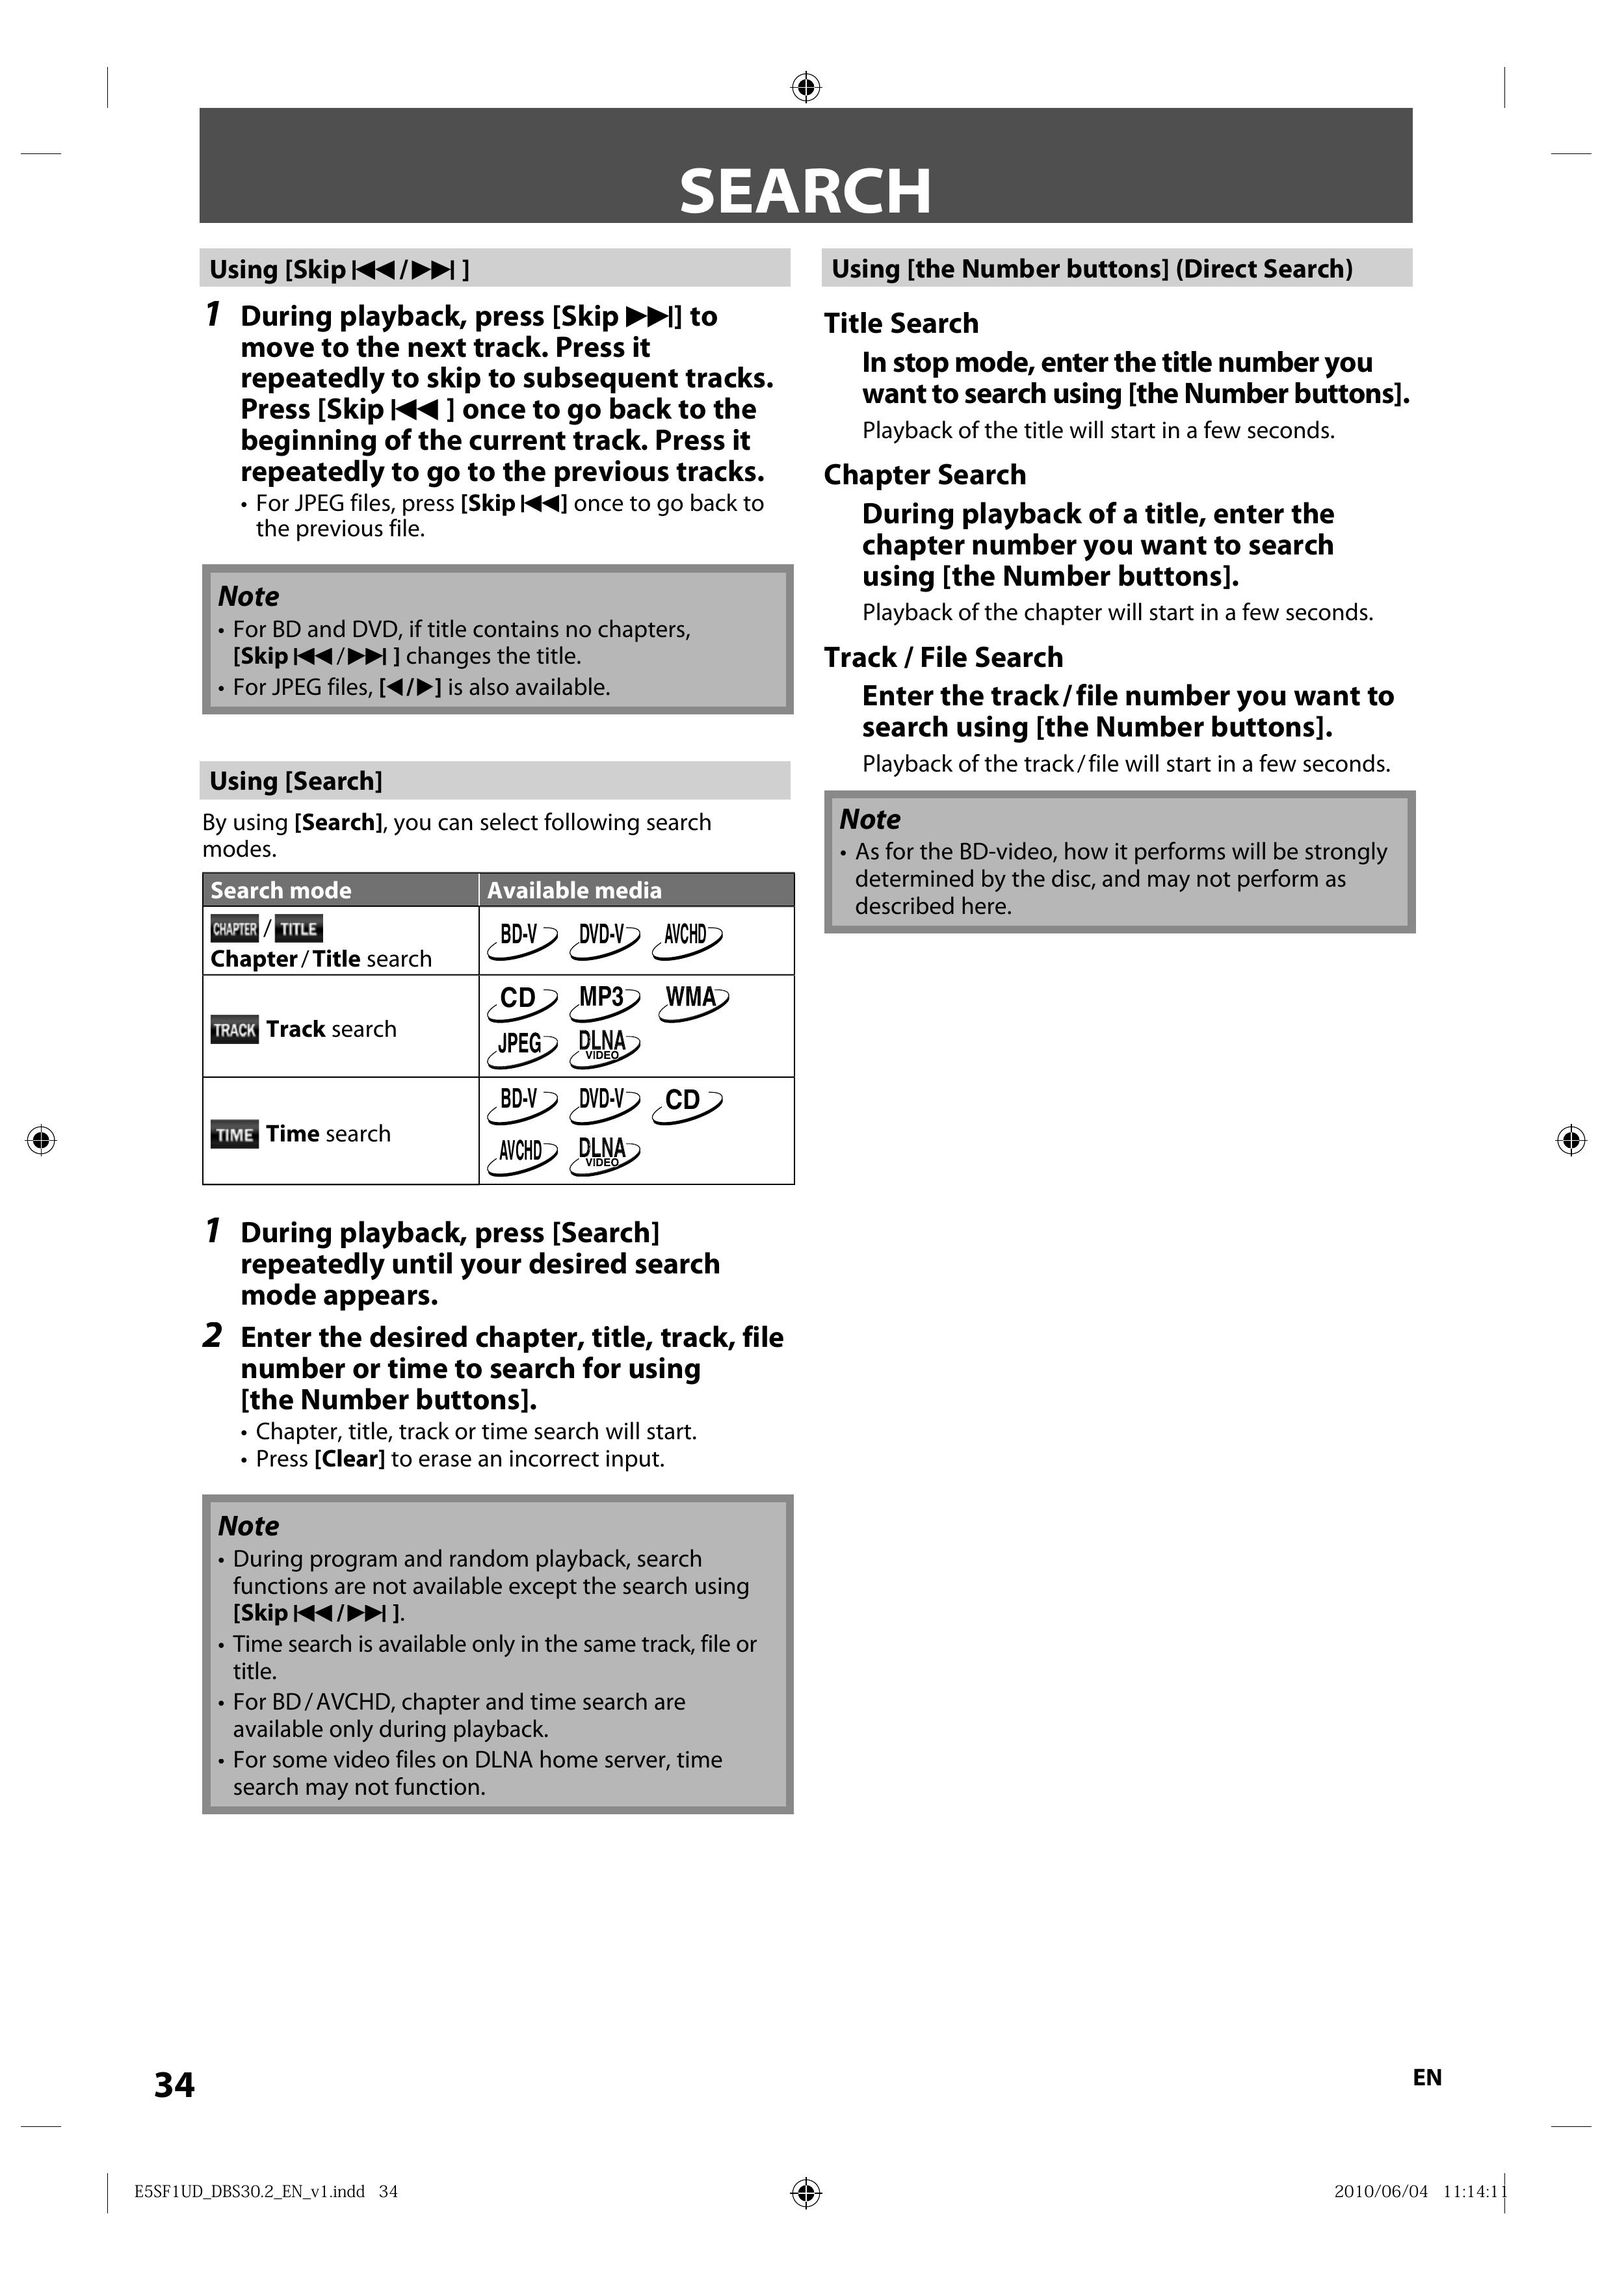 Integra 1VMN29753 Blu-ray Player User Manual (Page 34)